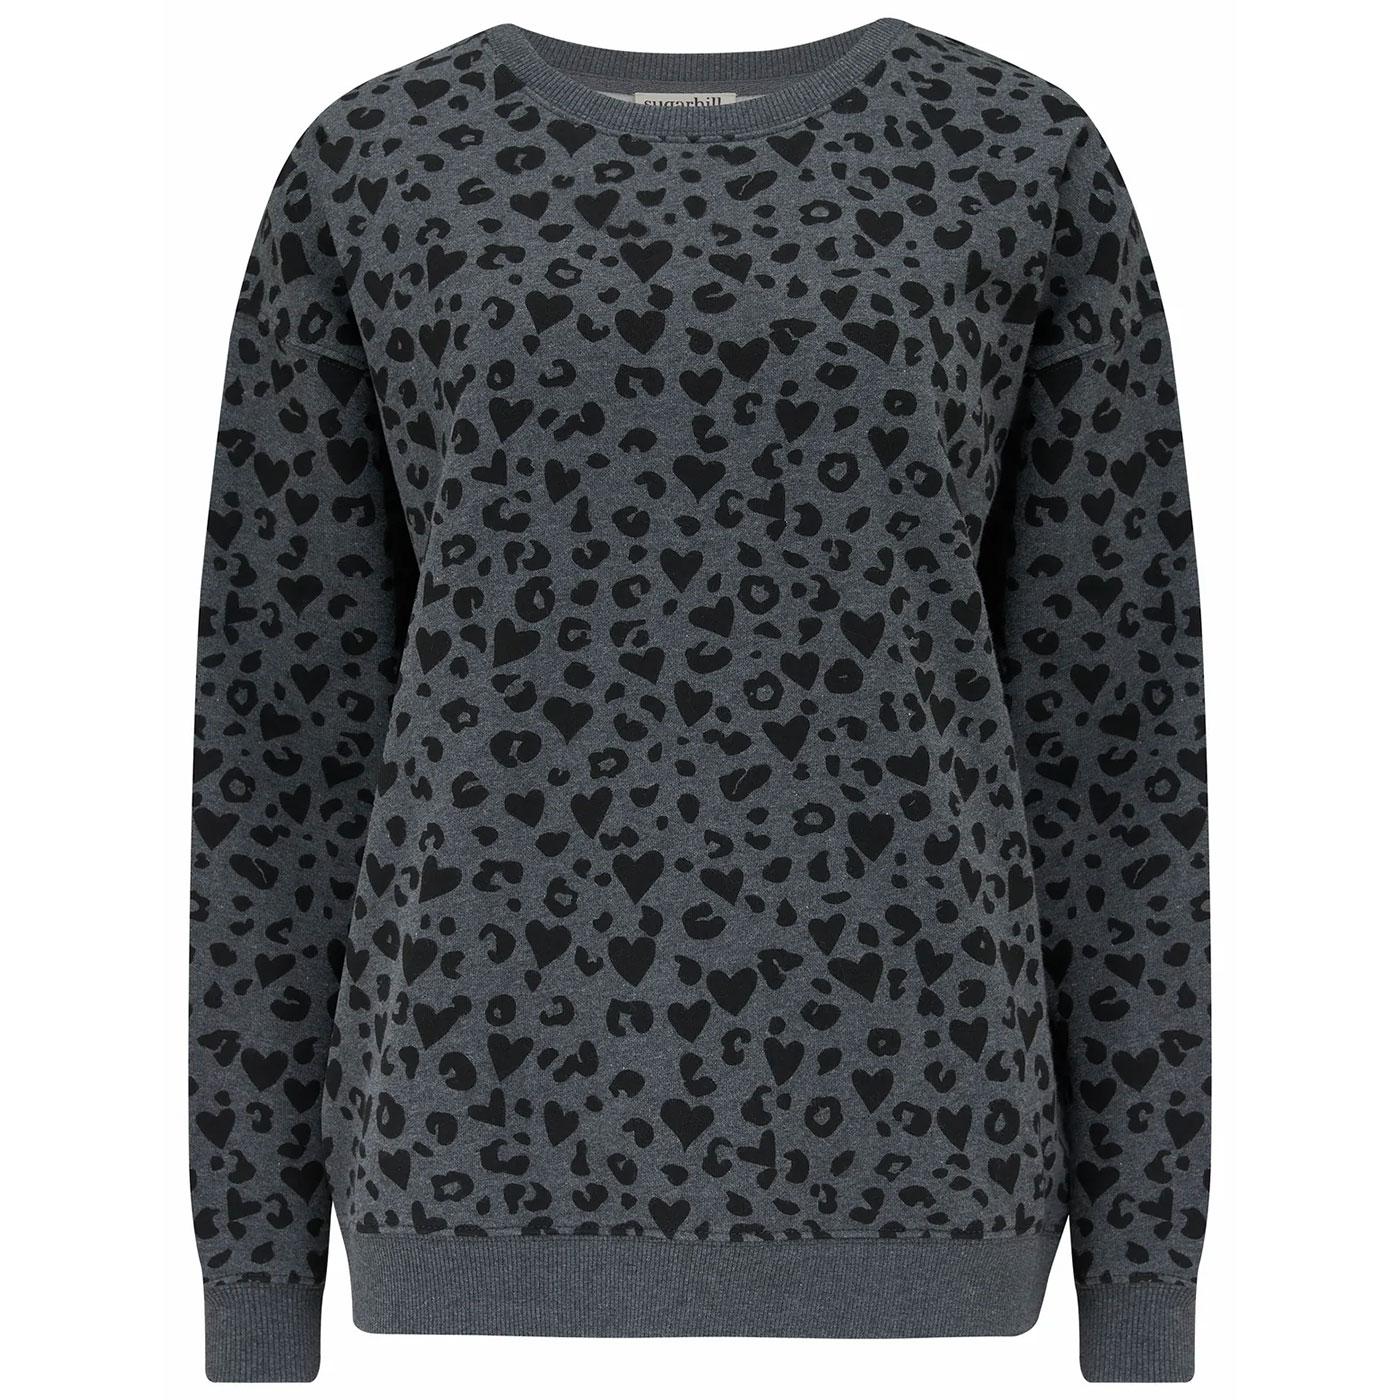 Noah SUGARHILL BRIGHTON Leopard Love Sweatshirt